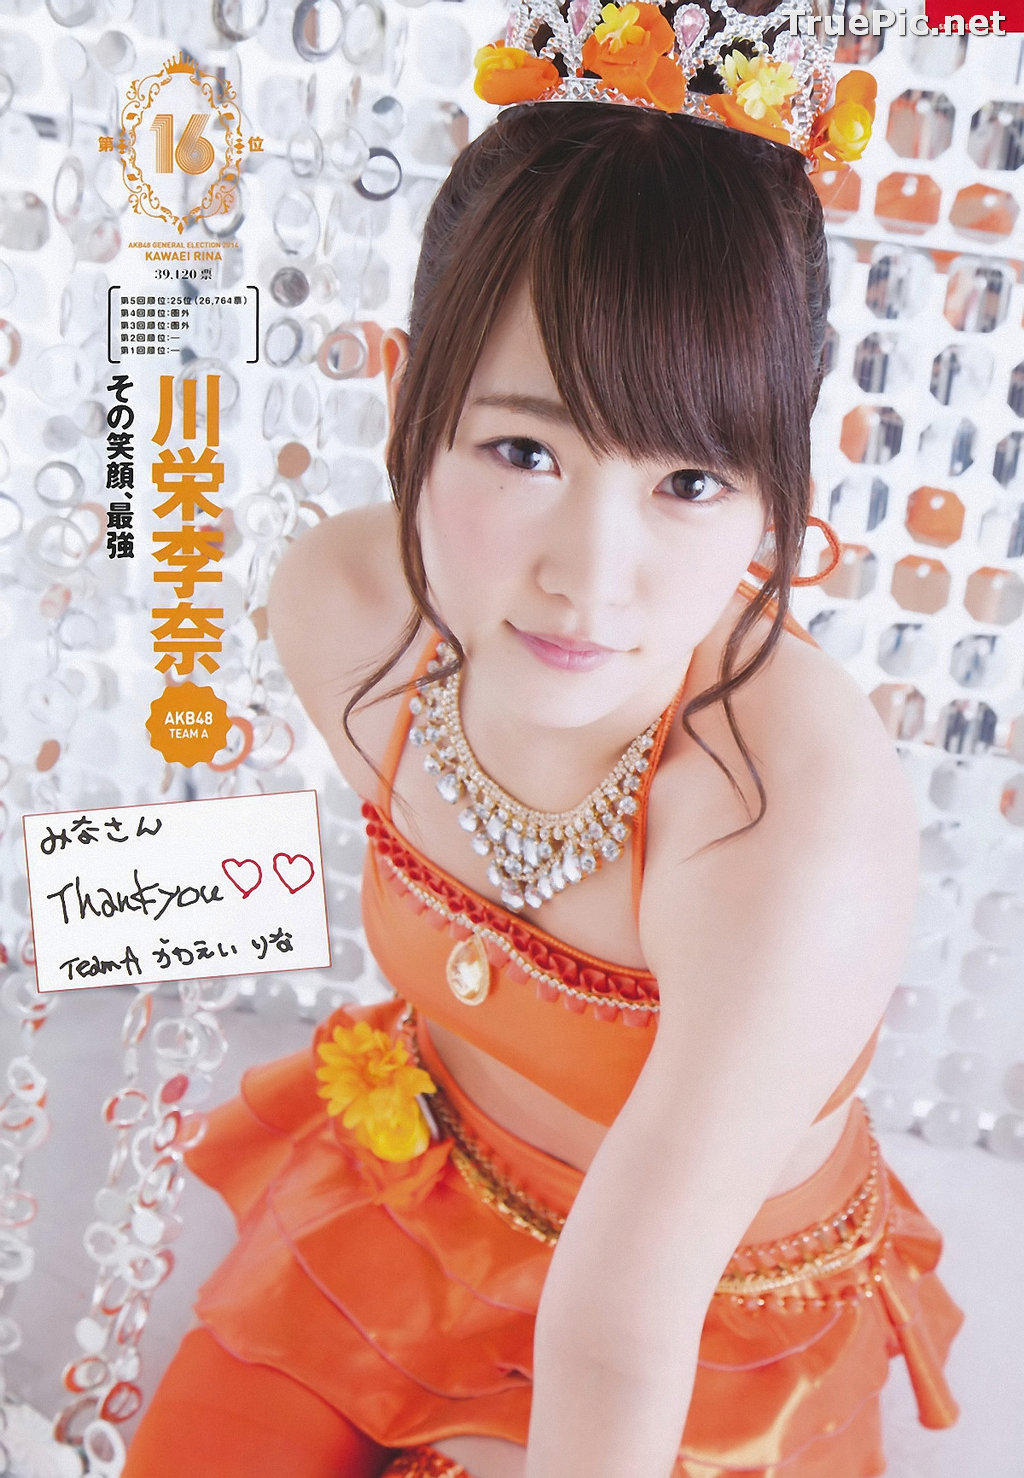 Image AKB48 General Election! Swimsuit Surprise Announcement 2014 - TruePic.net - Picture-43